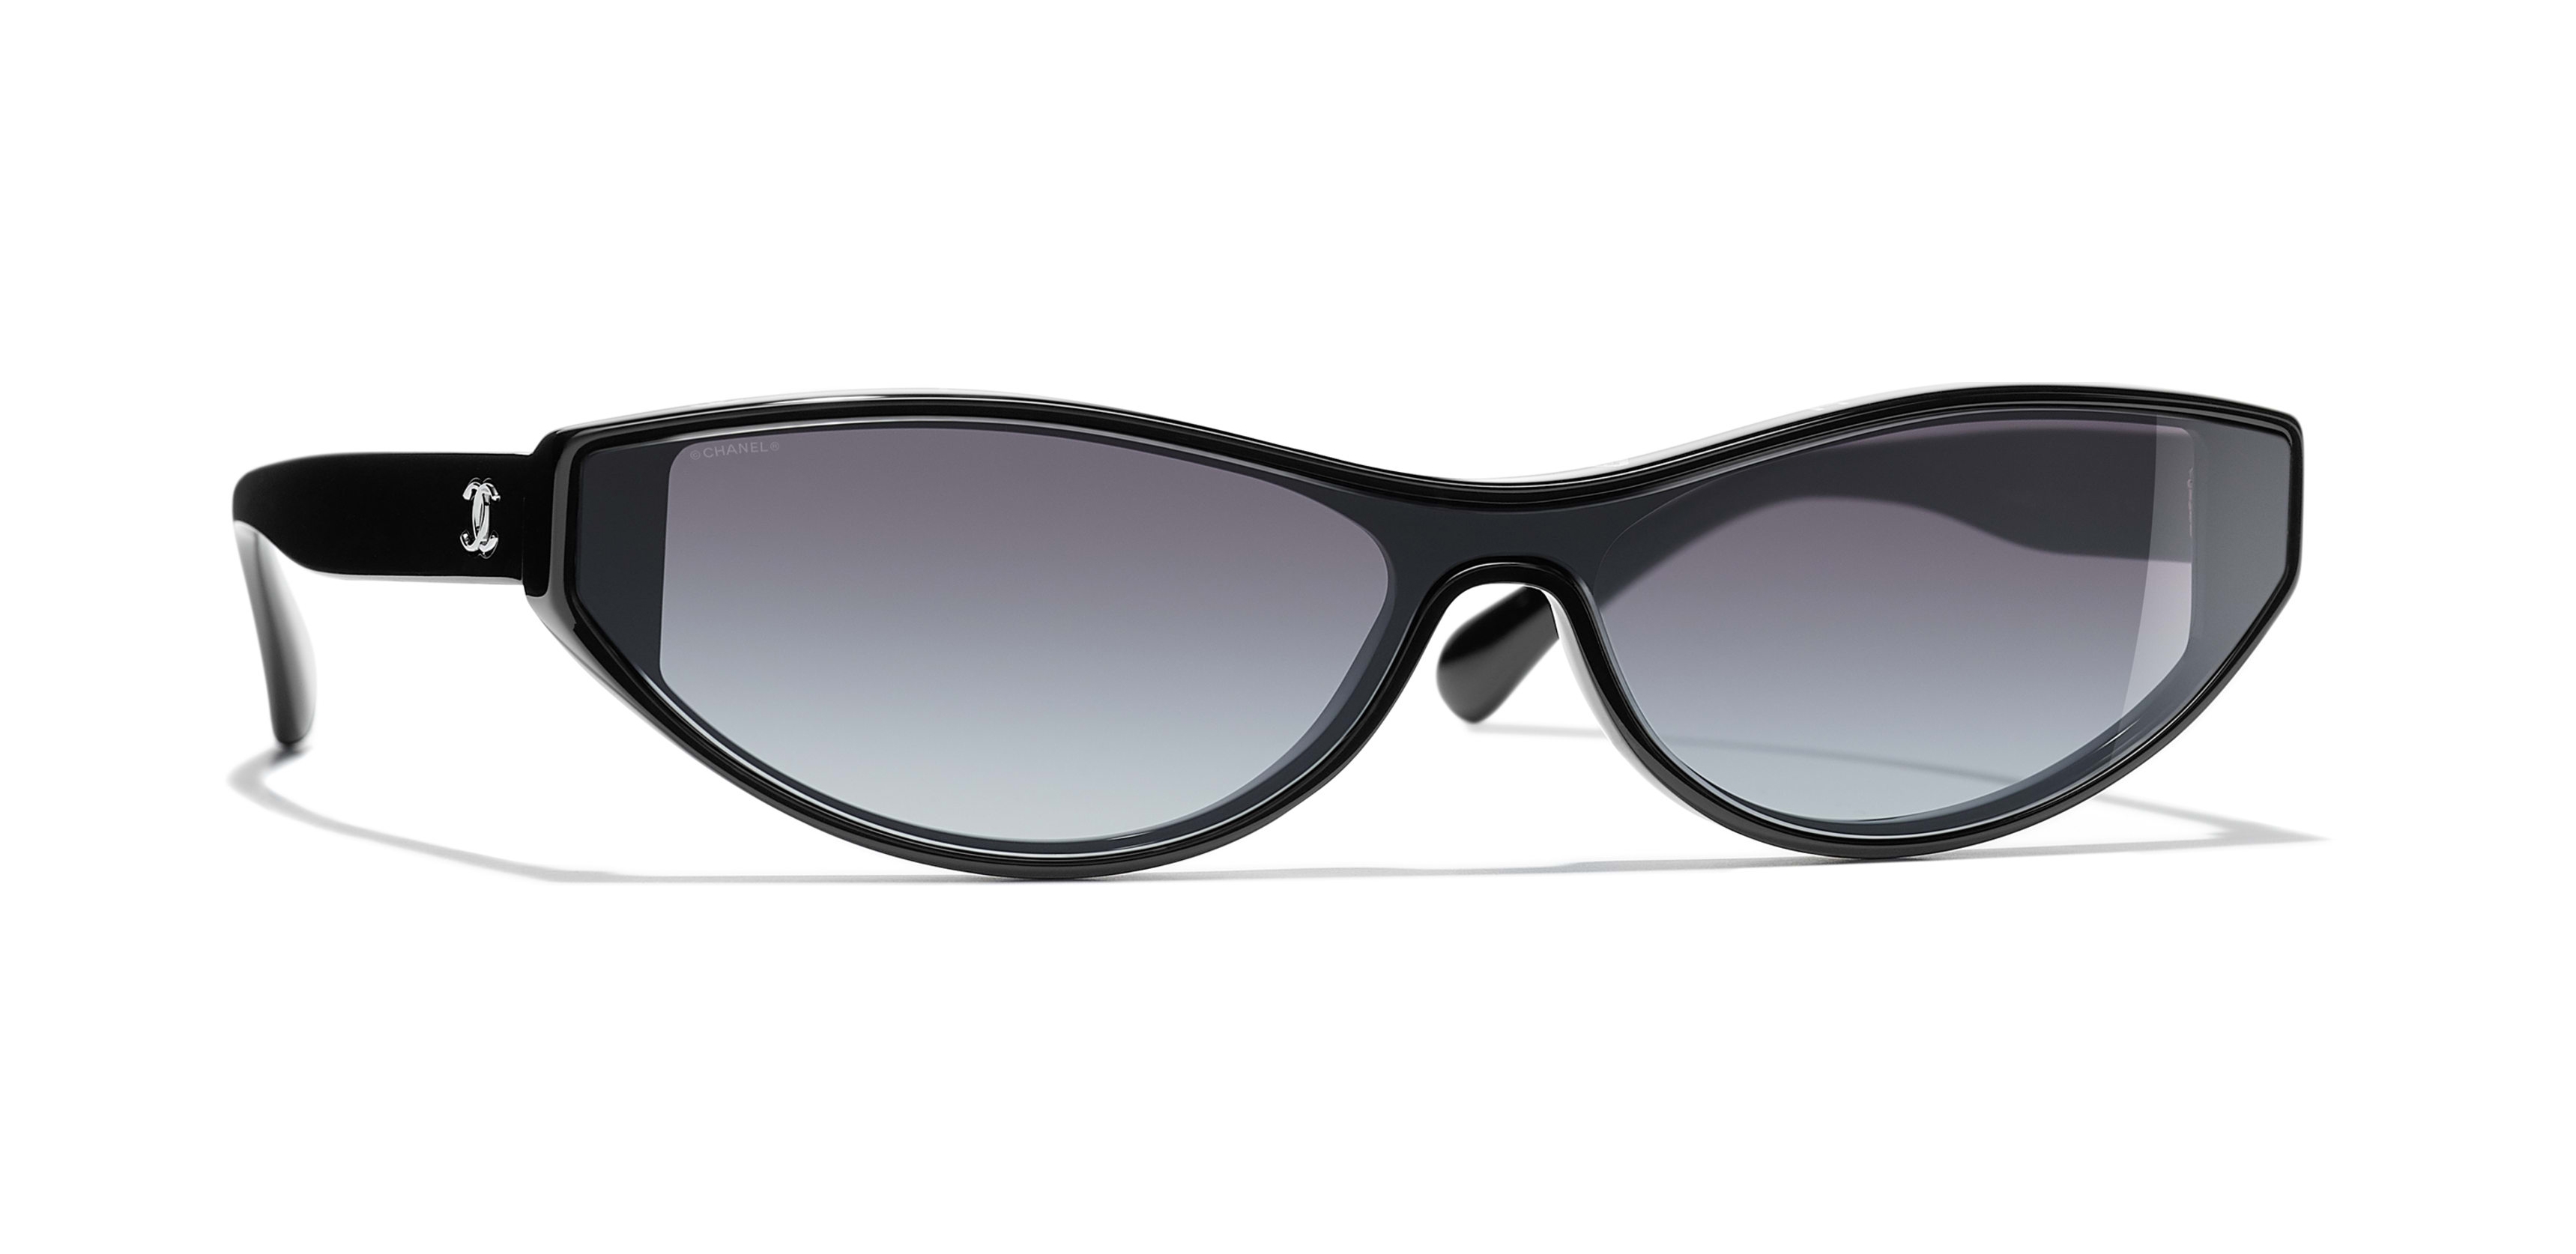 Chanel Sunglasses Case on Chain (Removable Strap), Black Caviar with Gold  Hardware, New in Box GA001